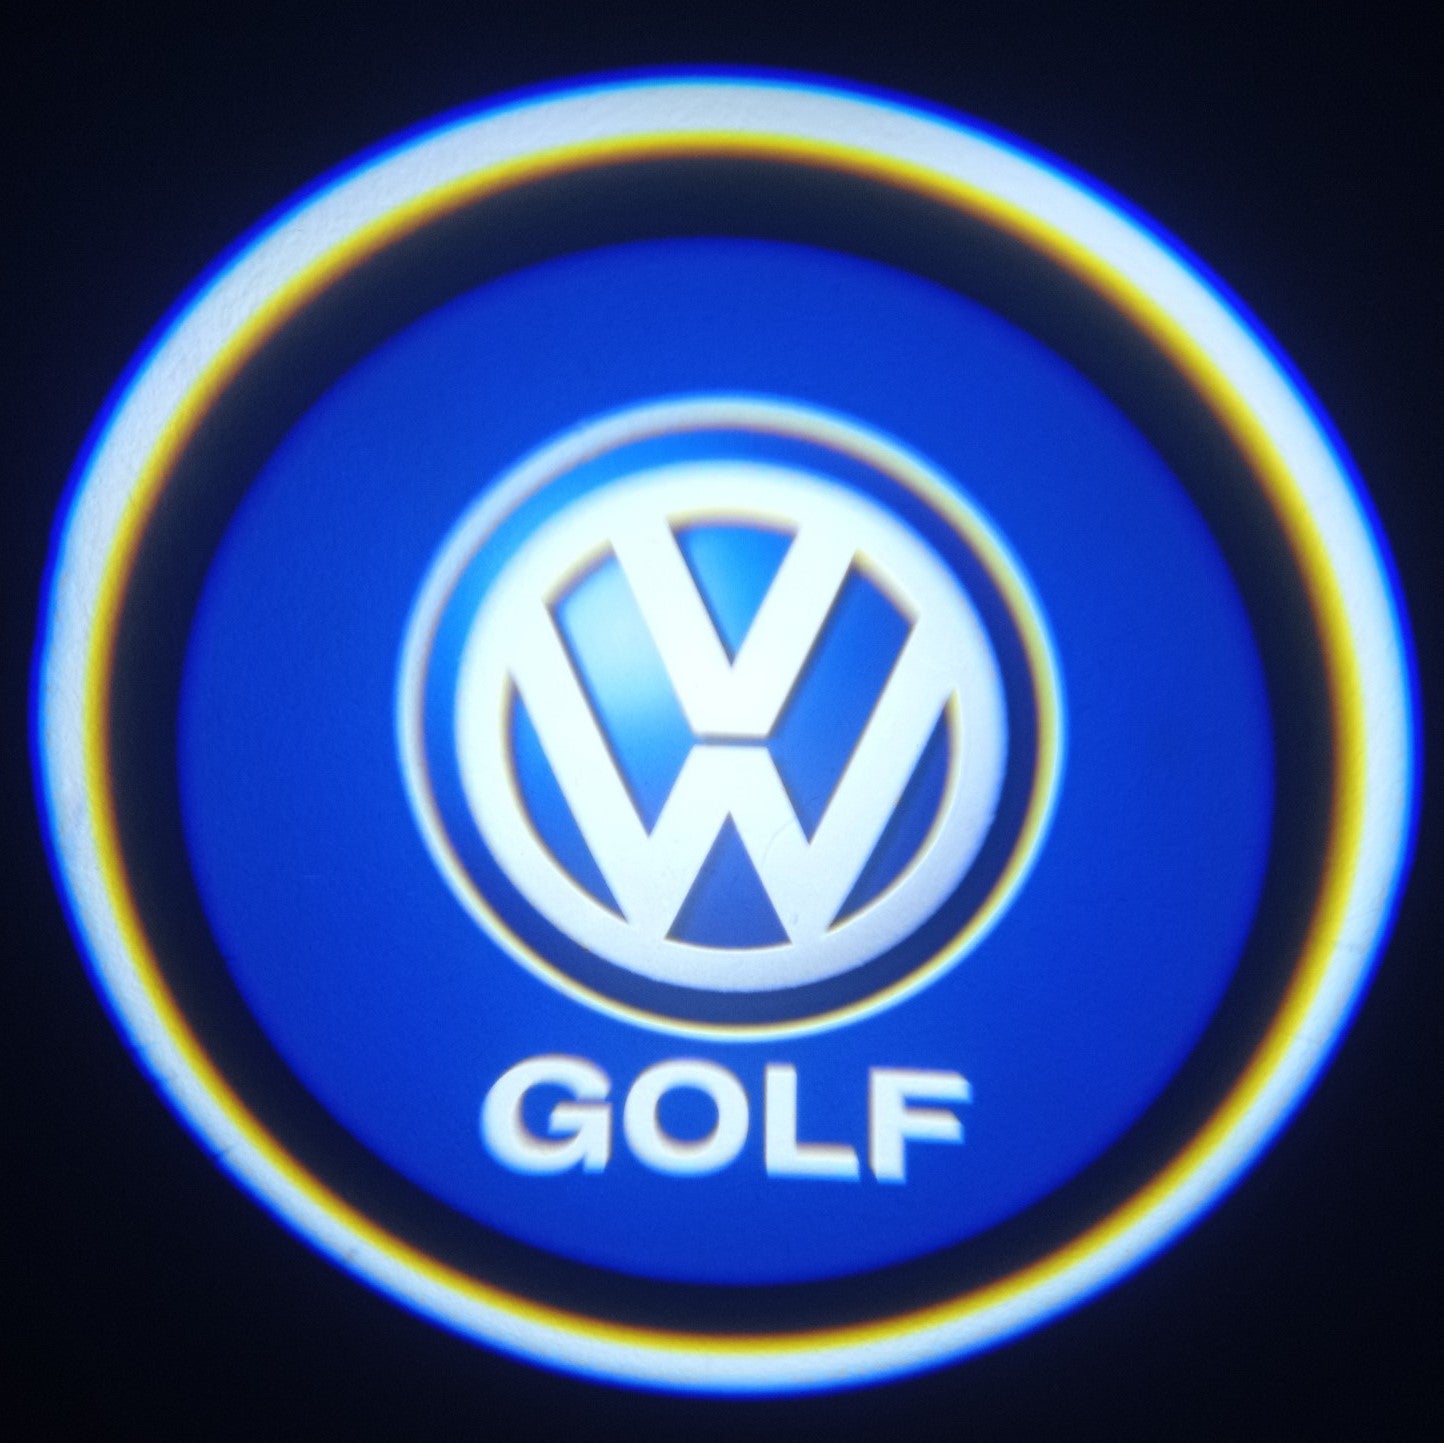 Luzes Cortesia com Logotipo marca Volkswagen Golf